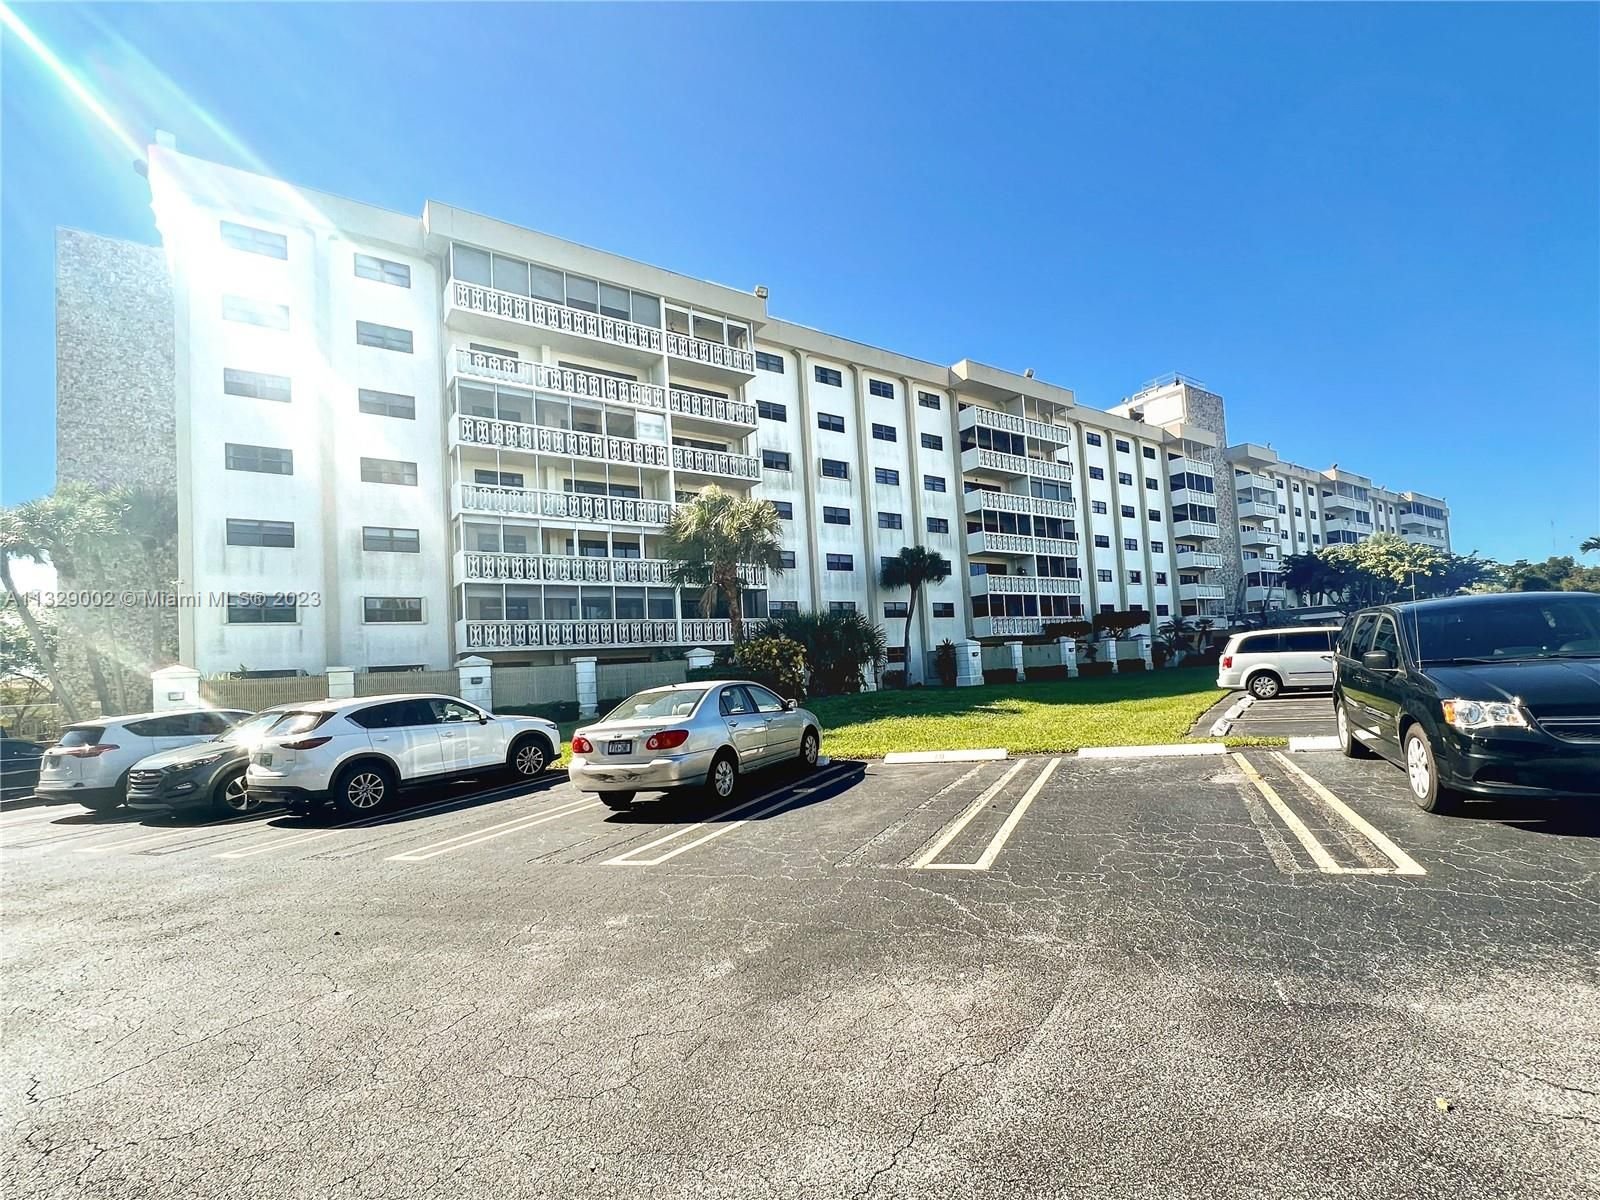 Real estate property located at 800 195th St #615, Miami-Dade County, Miami, FL